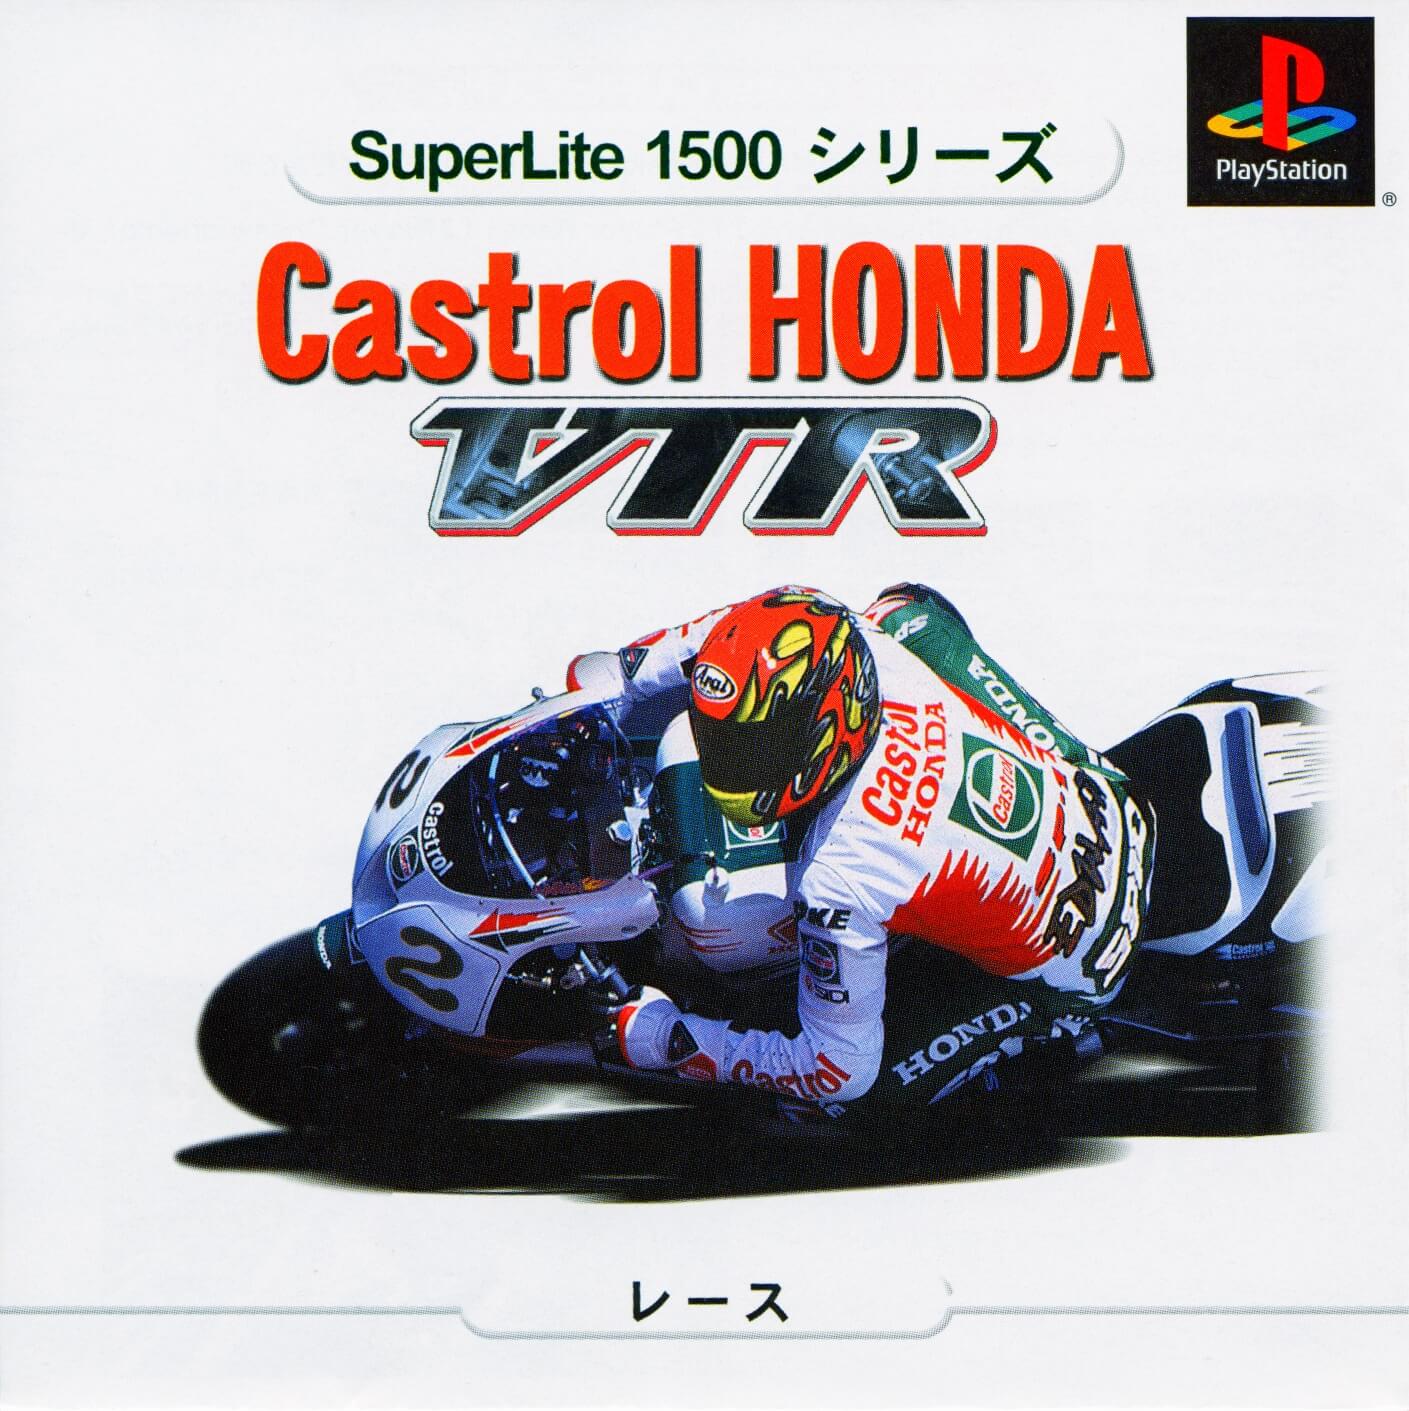 Castrol Honda World Superbike Team VTR